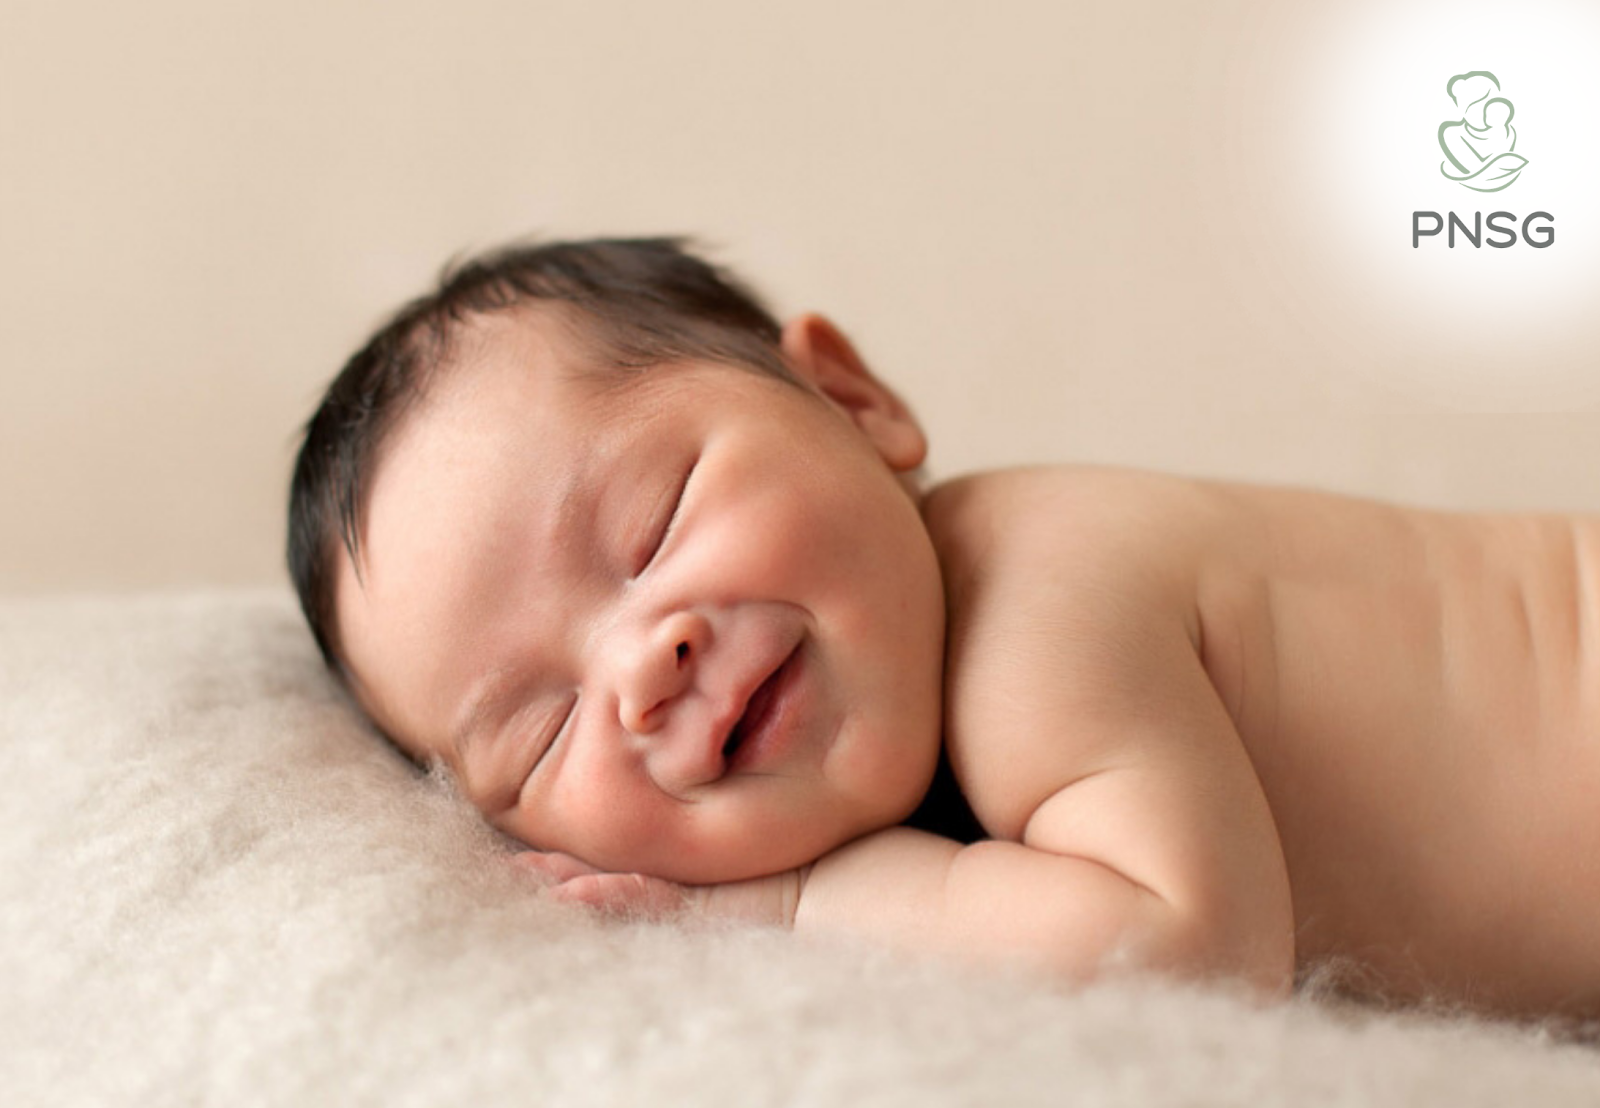 Baby Sleeping - PNSG